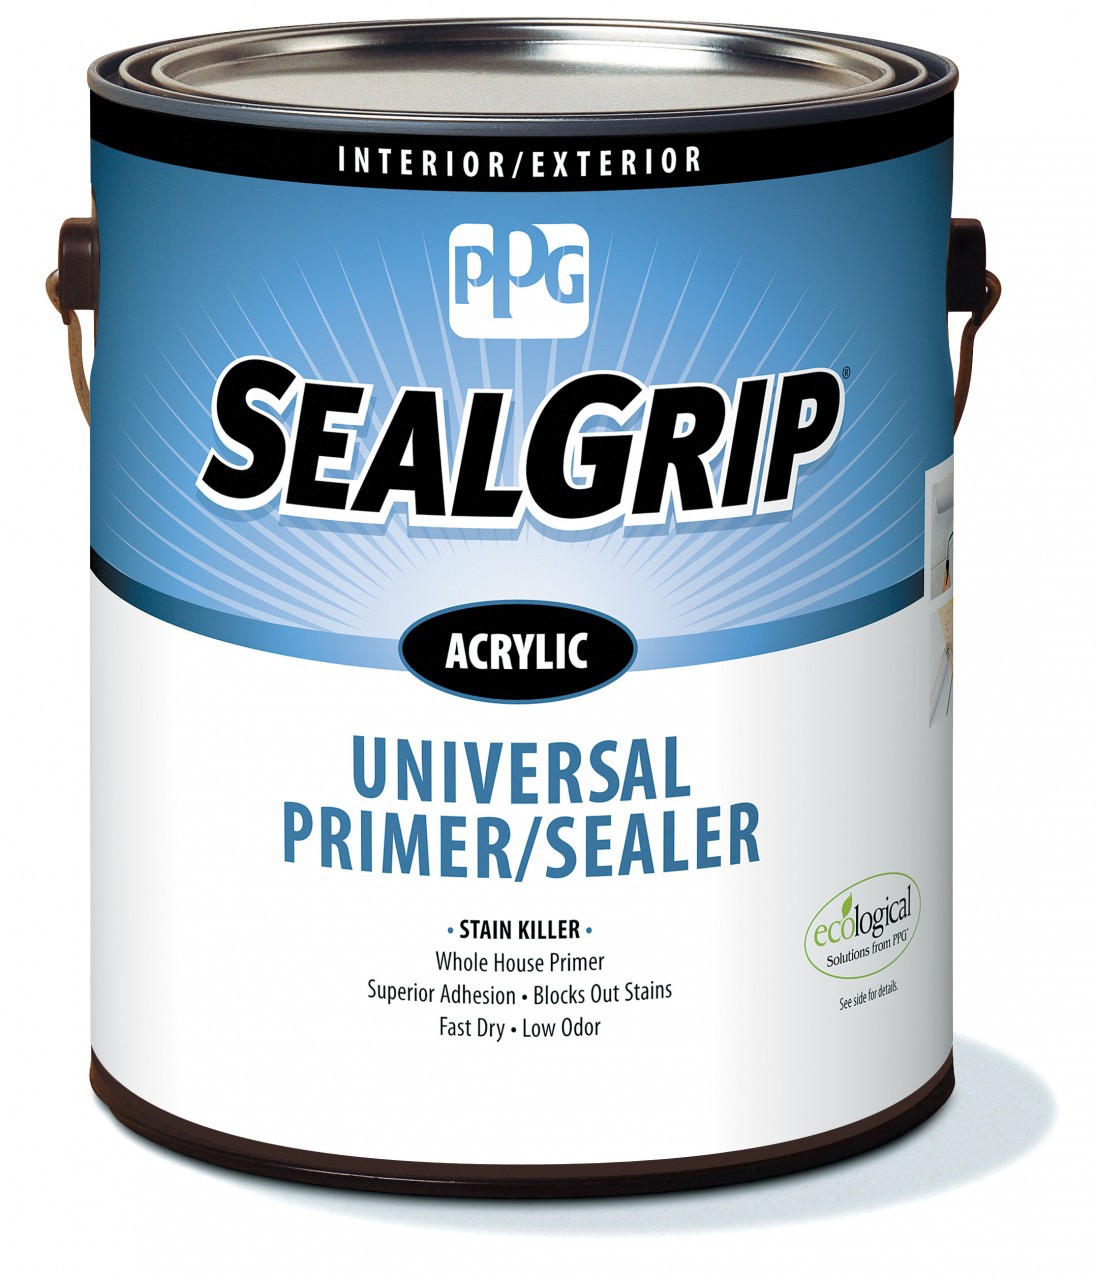 Exterior Acrylic Universal Primer Sealer Premier Paint Wallpaper